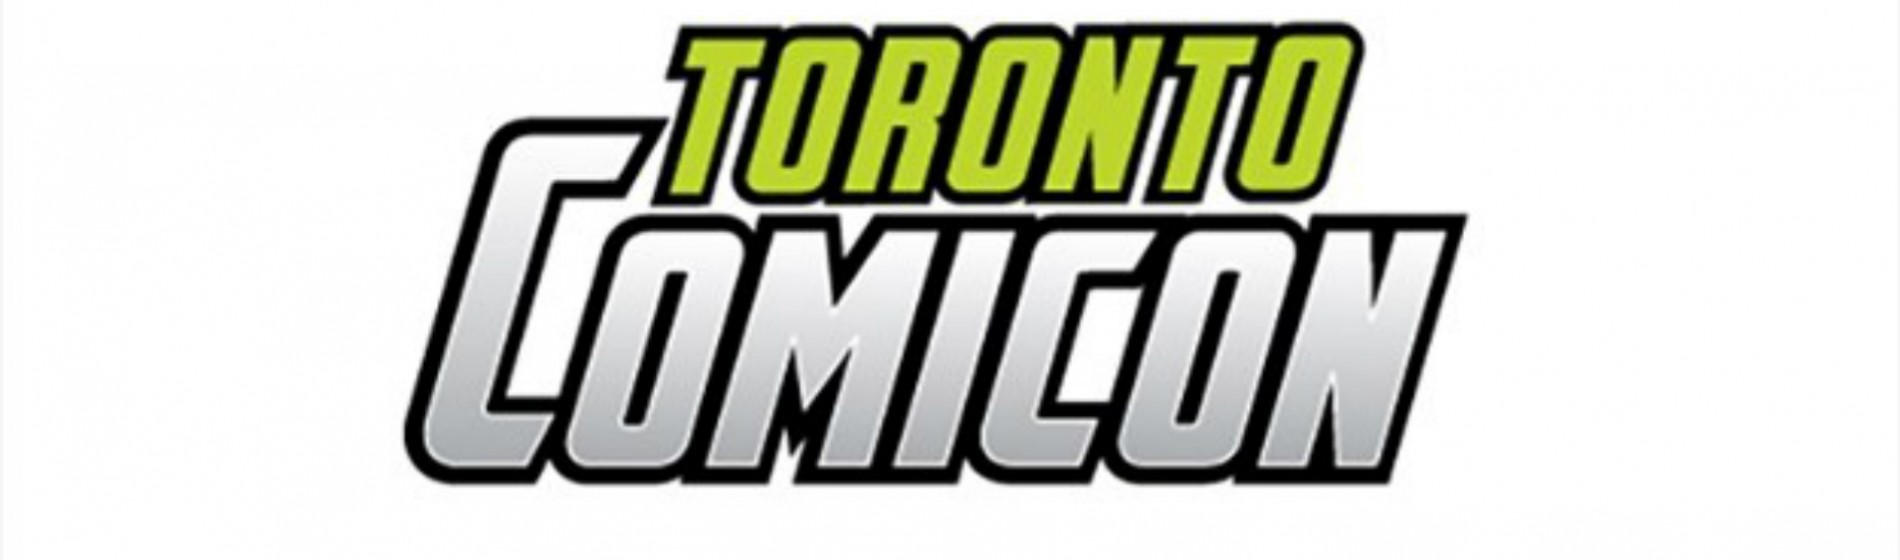 Toronto Comicon 2019 02